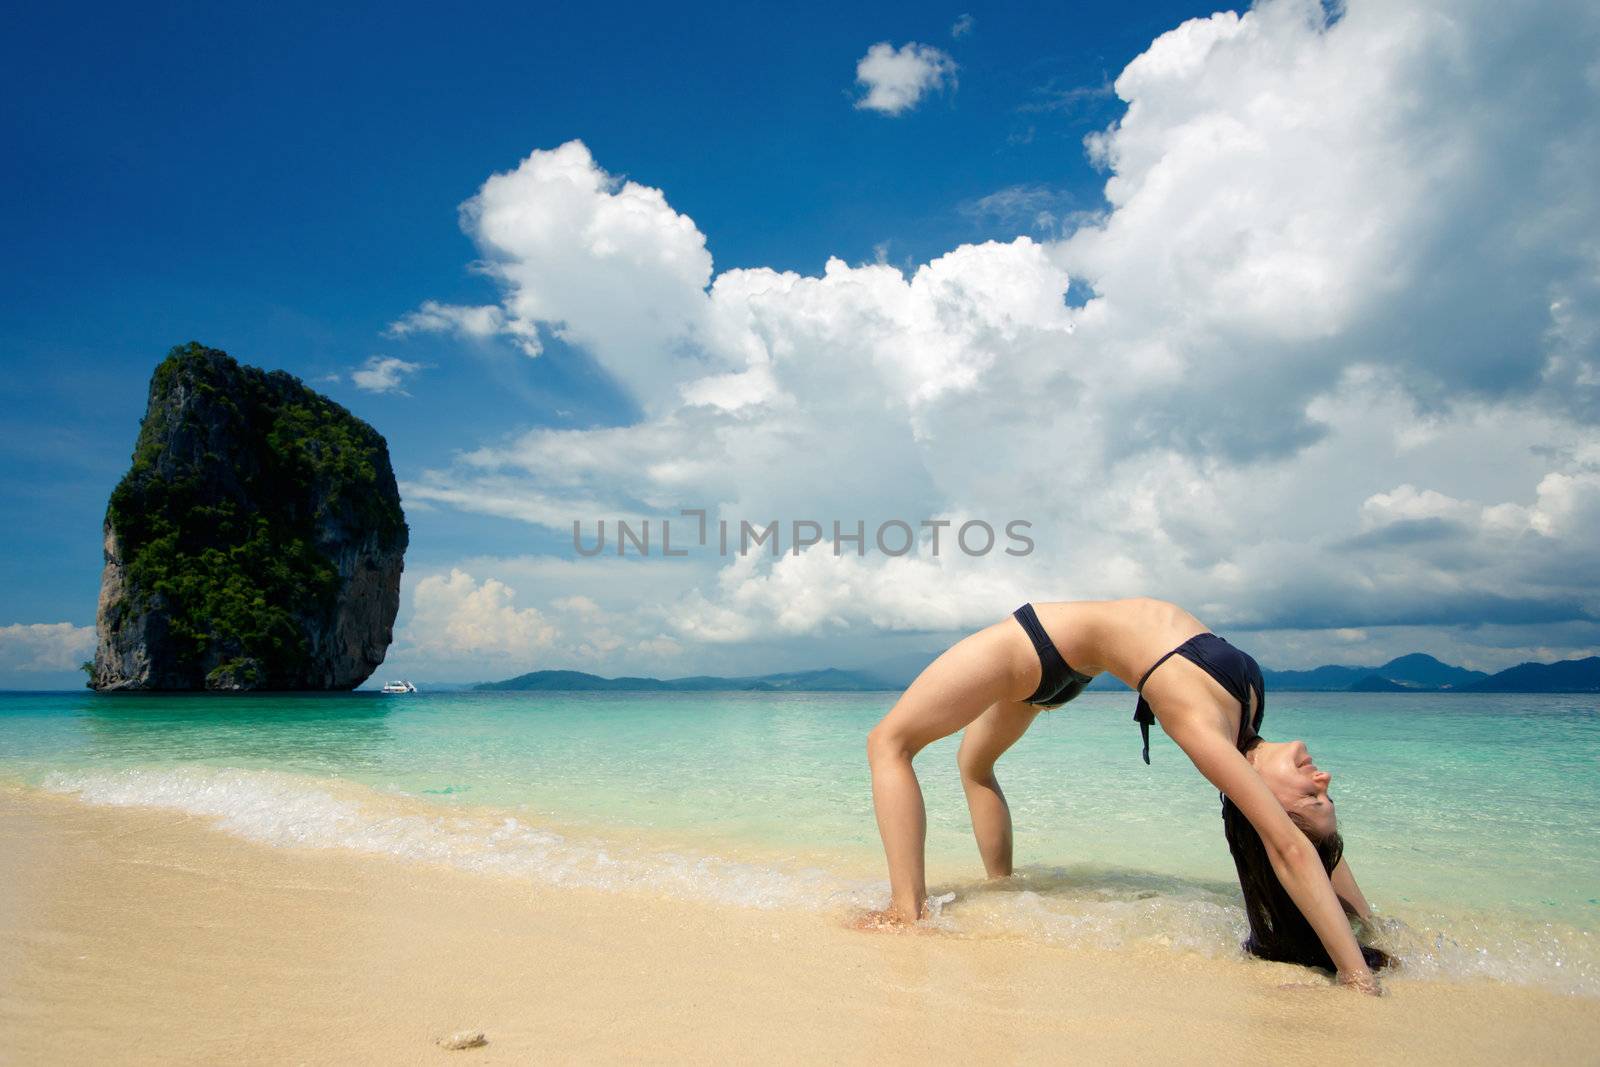 Acrobatic trick on the sandy beach